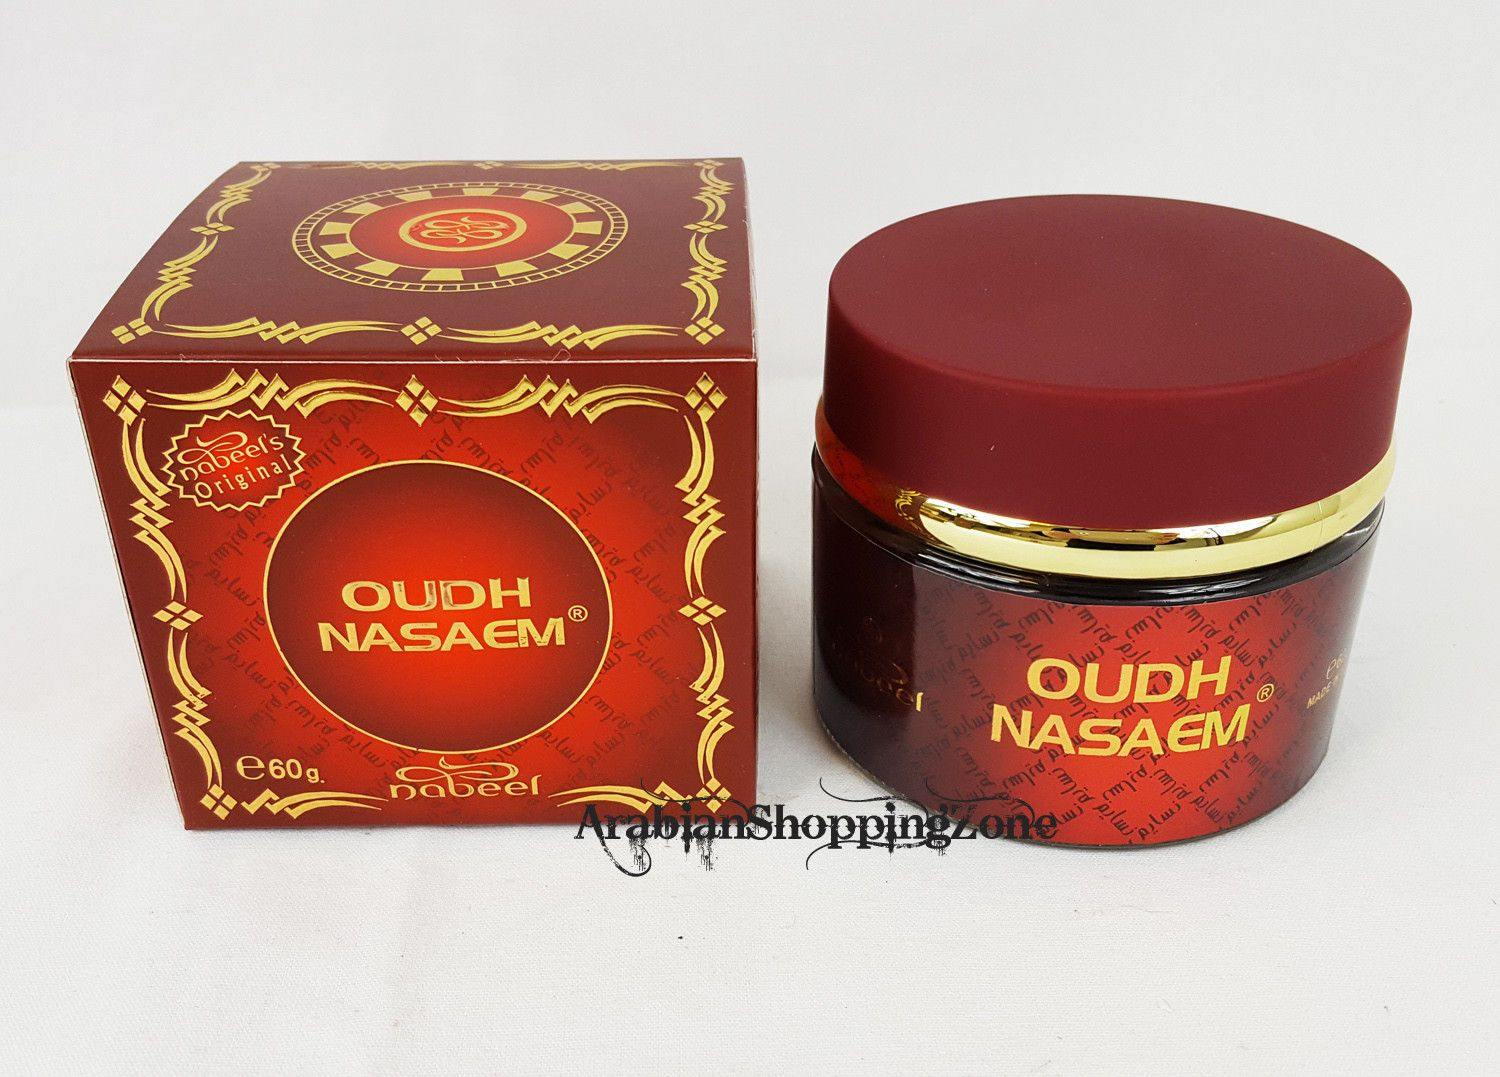 Oudh Nabeel UAE Incense Bakhoor Arabic Oud Fragrance 60g - Arabian Shopping Zone